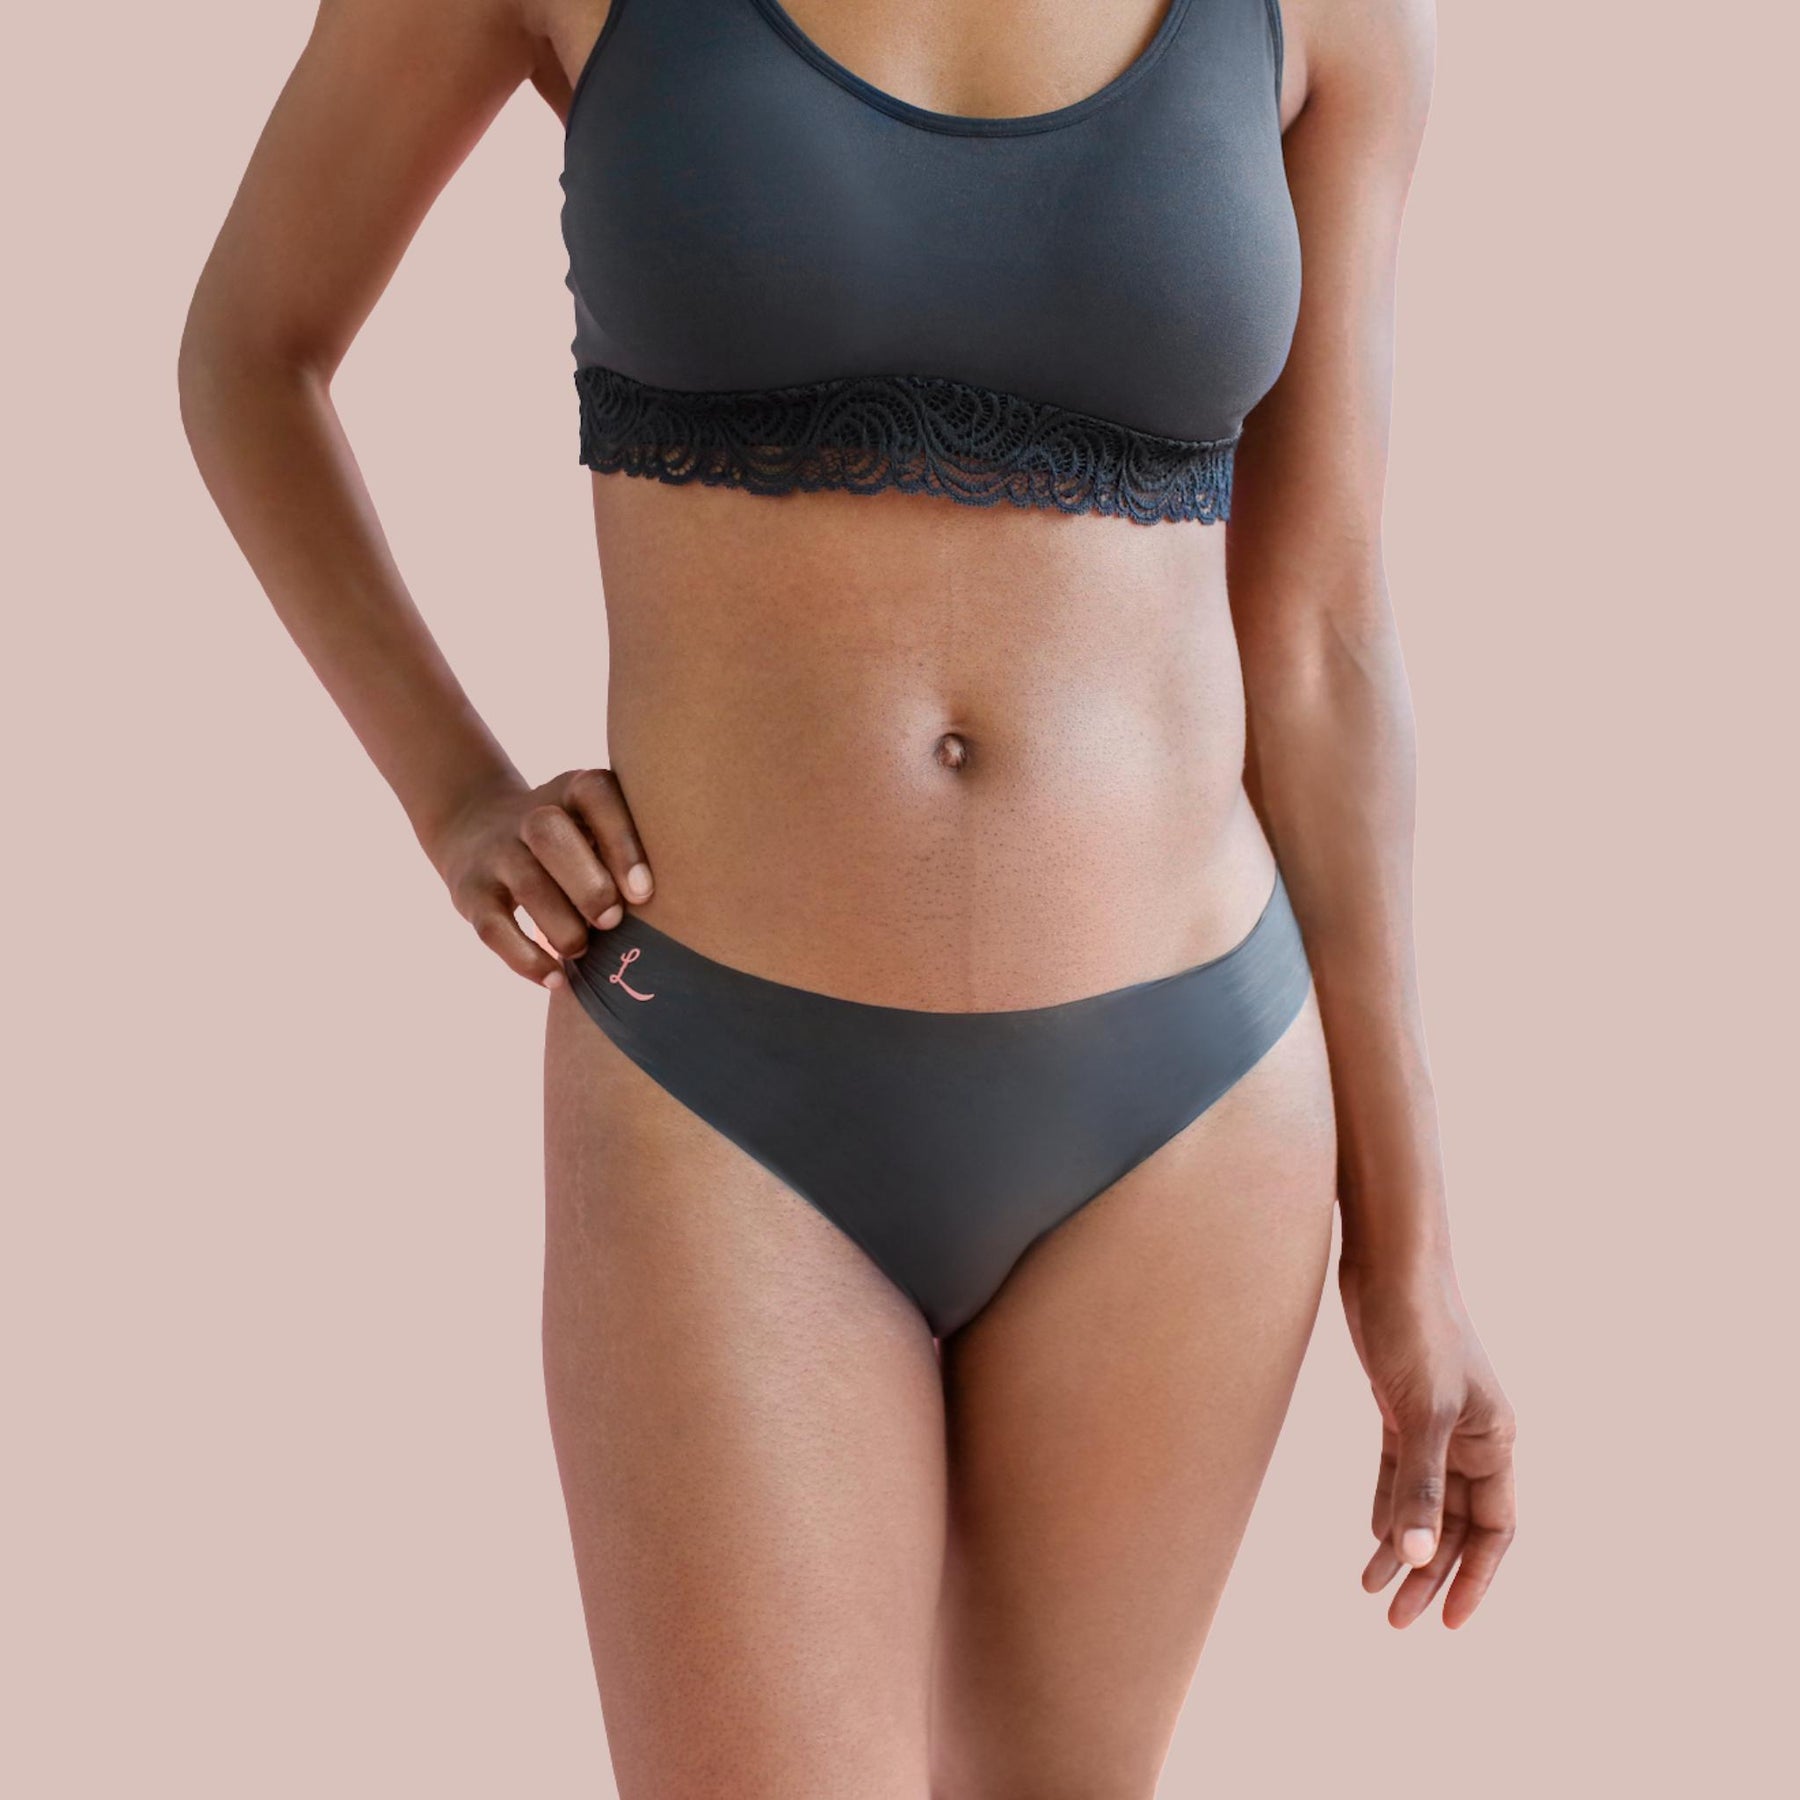 Lorals model Gladys demonstrates the front view of Pleasure Undies in Black Bikinis